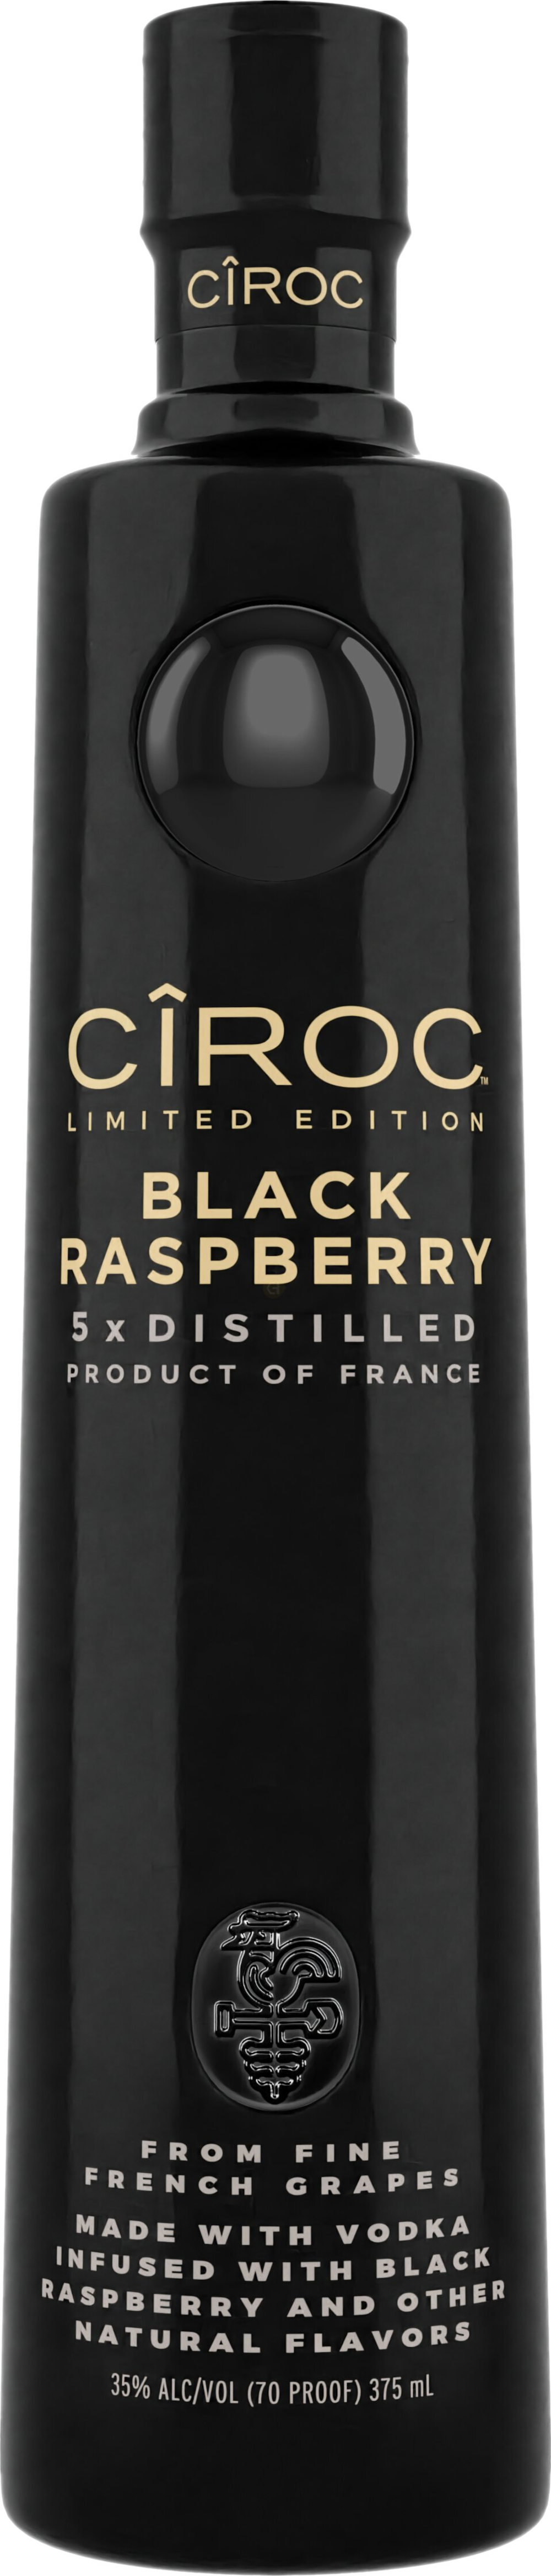 Ciroc Black Rasberry Limited Edition Vodka 375ML